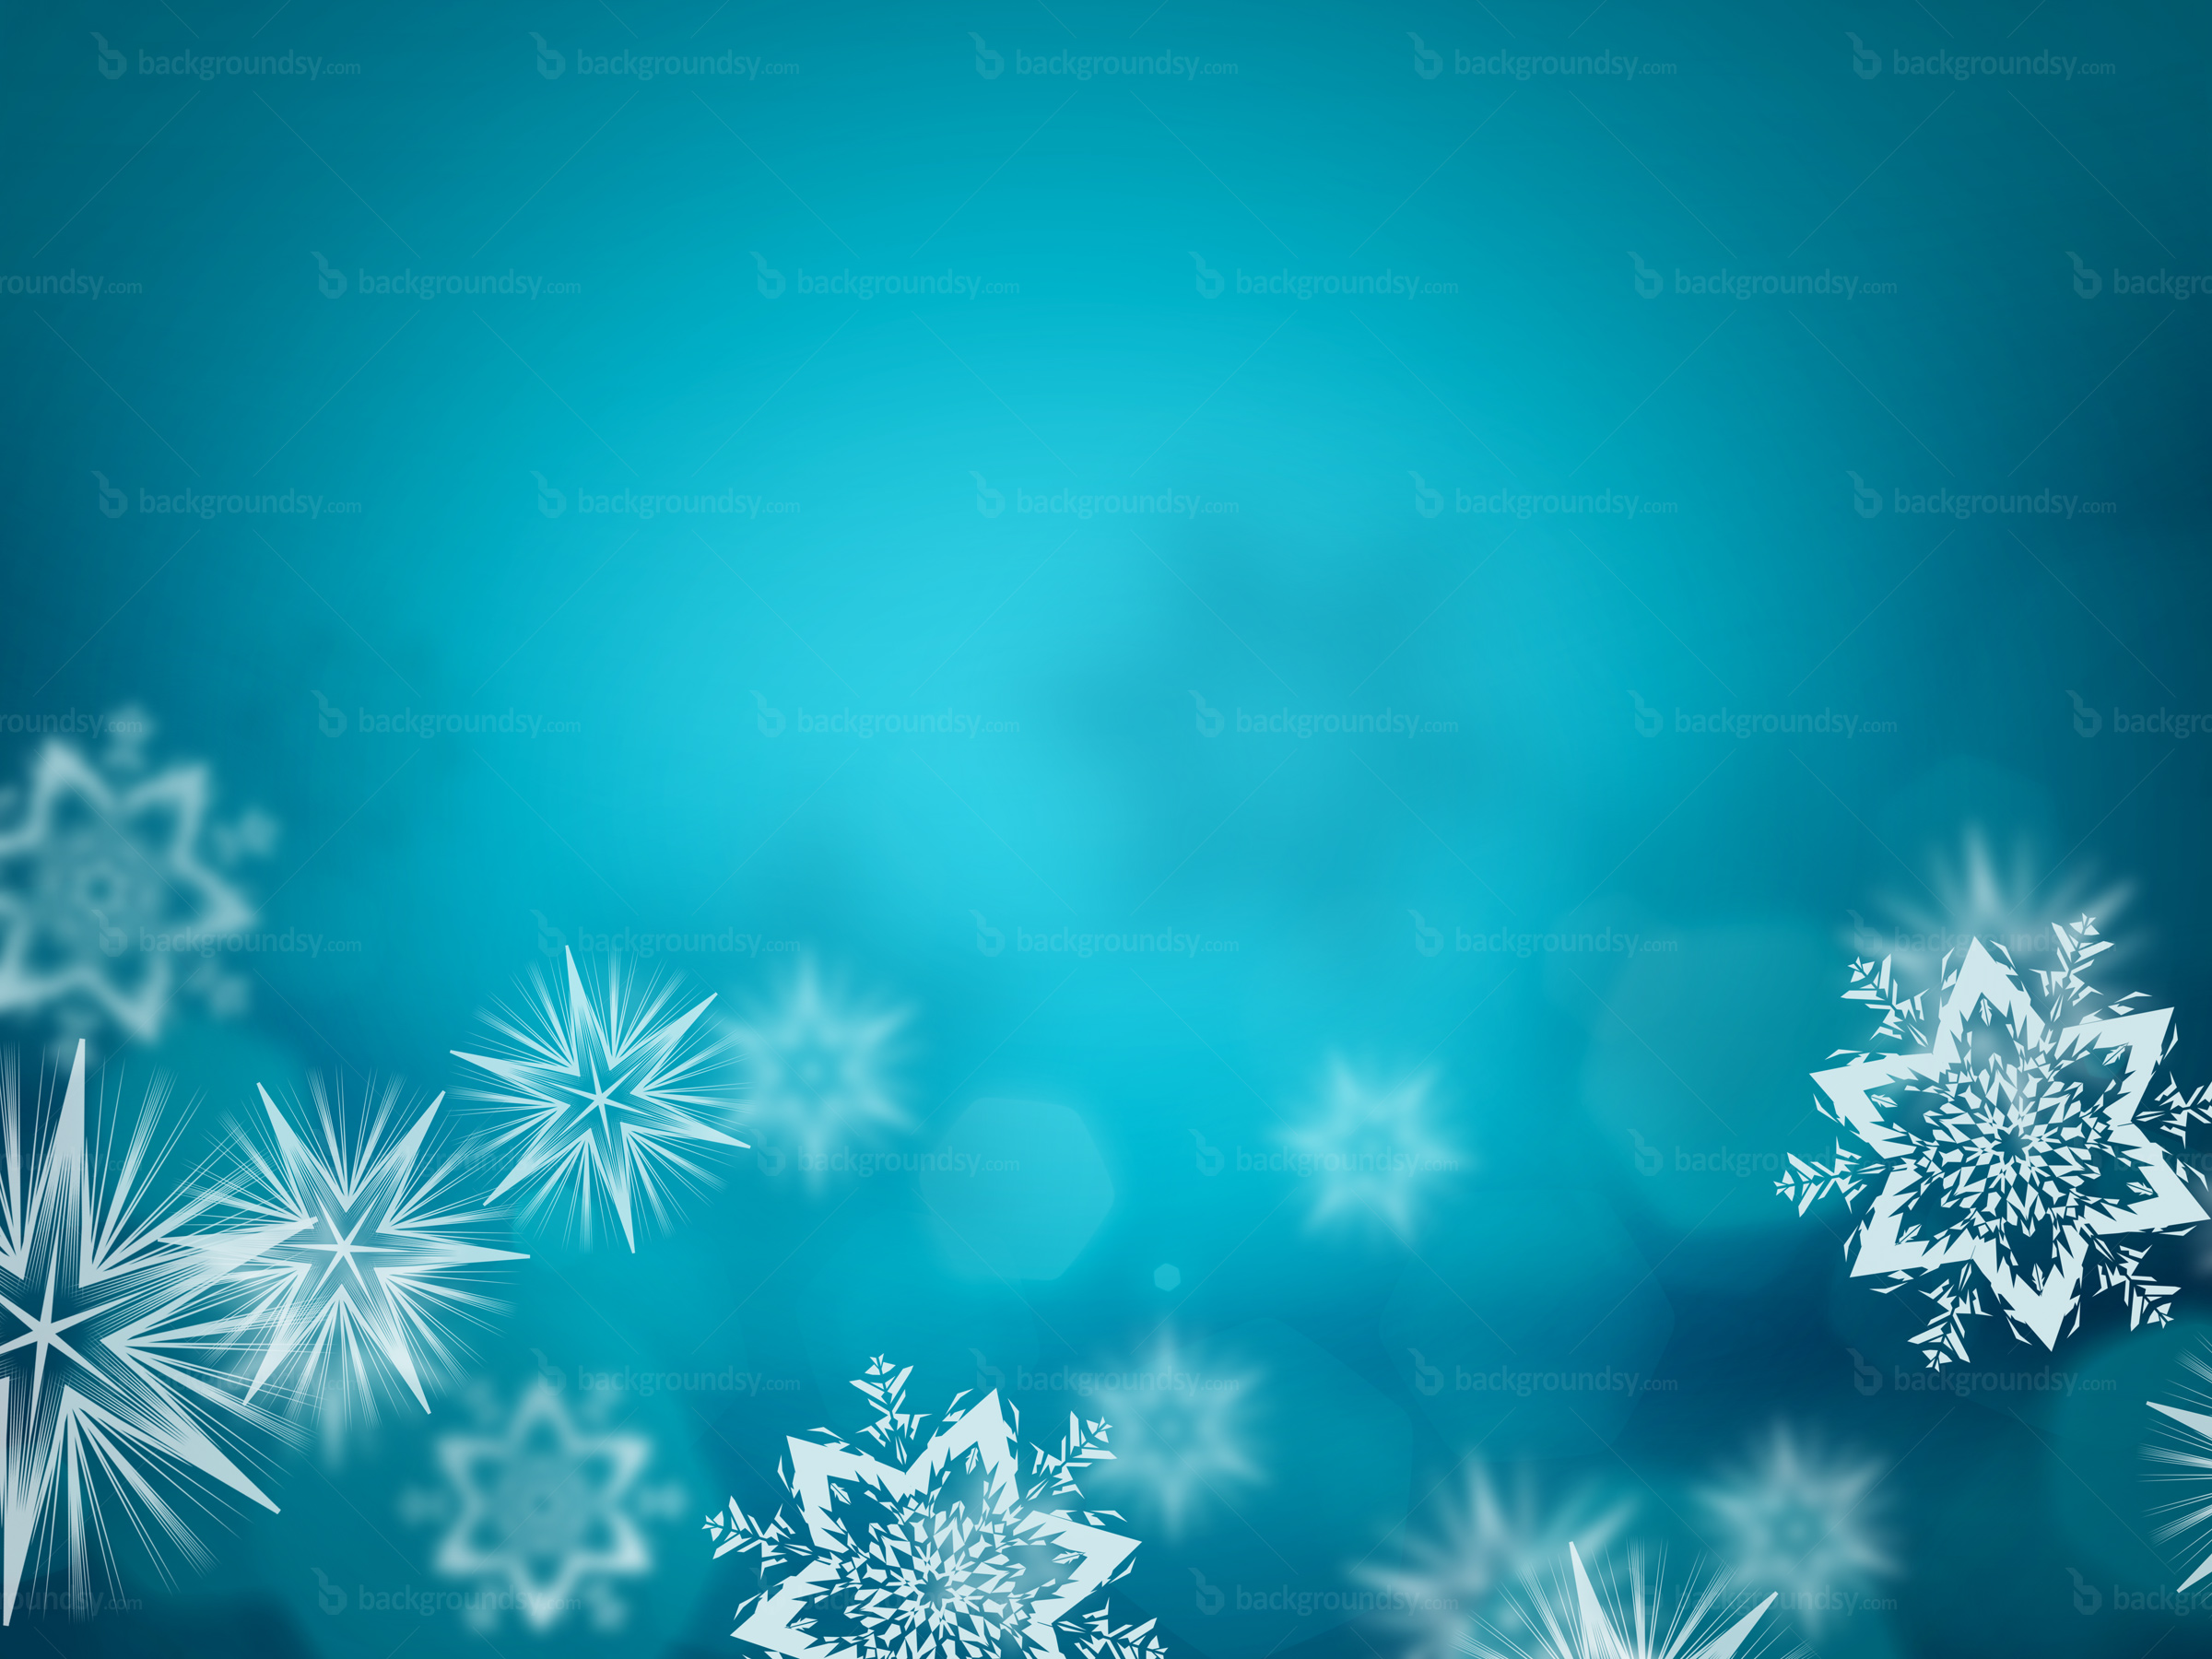 File Name Winter Christmas Desktop Background Home Design Ideas